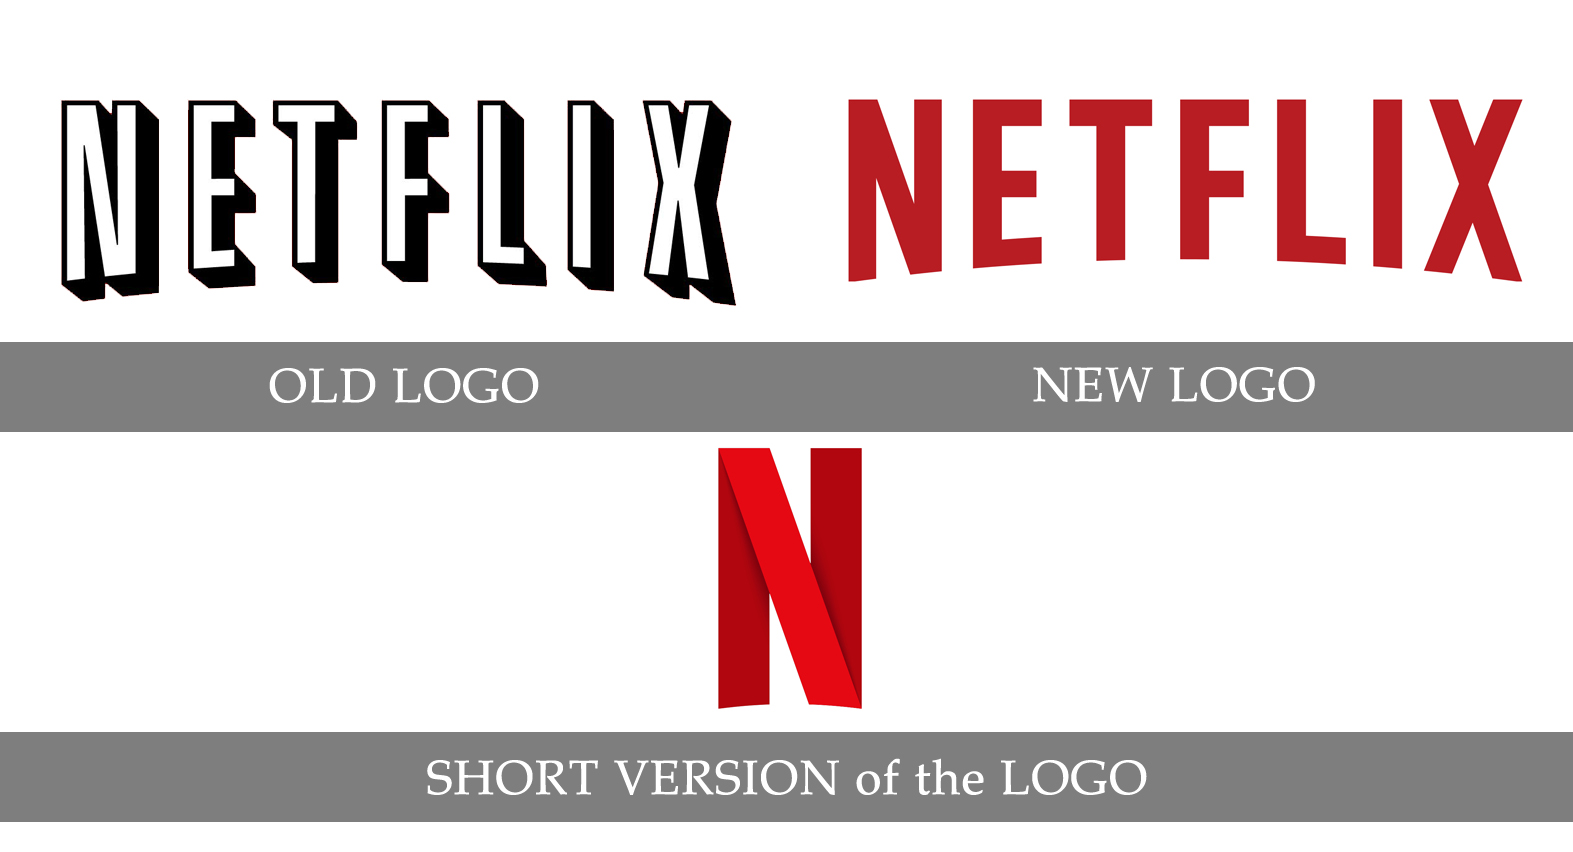 Netflix Logo Design – History, Meaning and Evolution